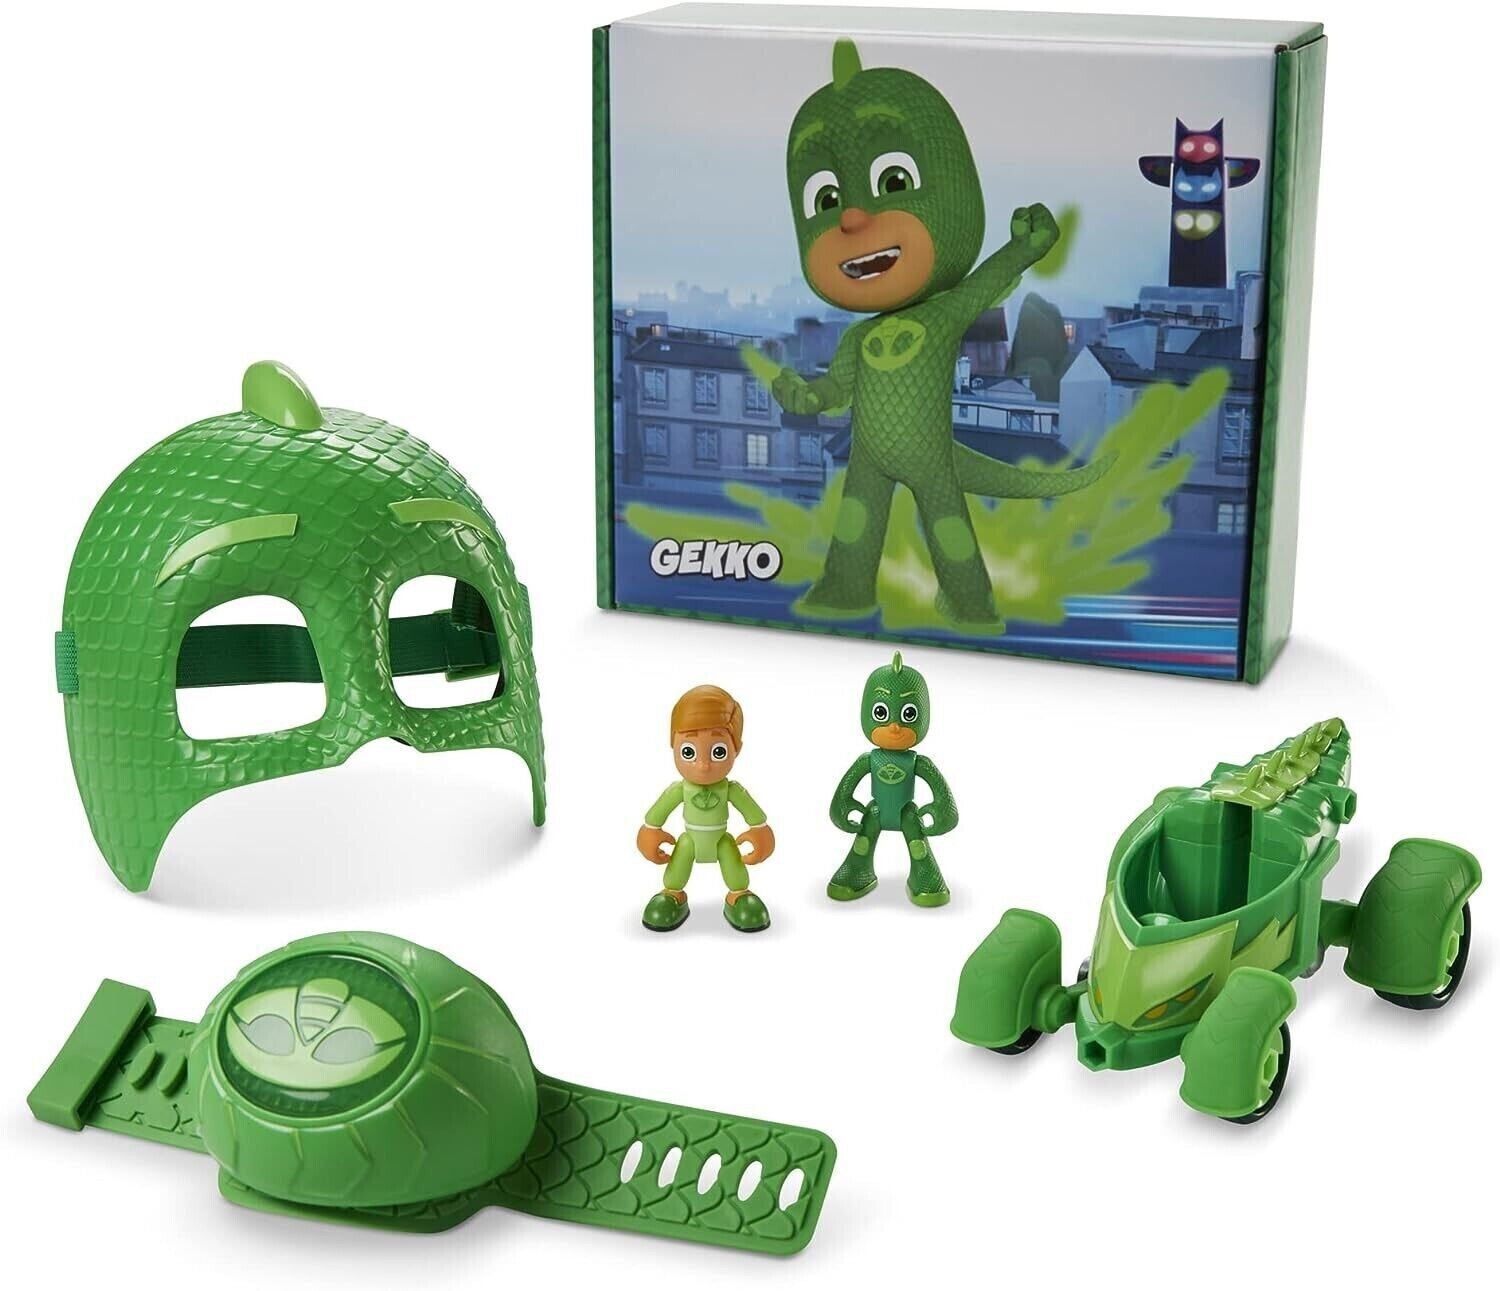 PJ Masks Gekko Power Pack Toy Set with Action Figures Pretend Play (damaged box)